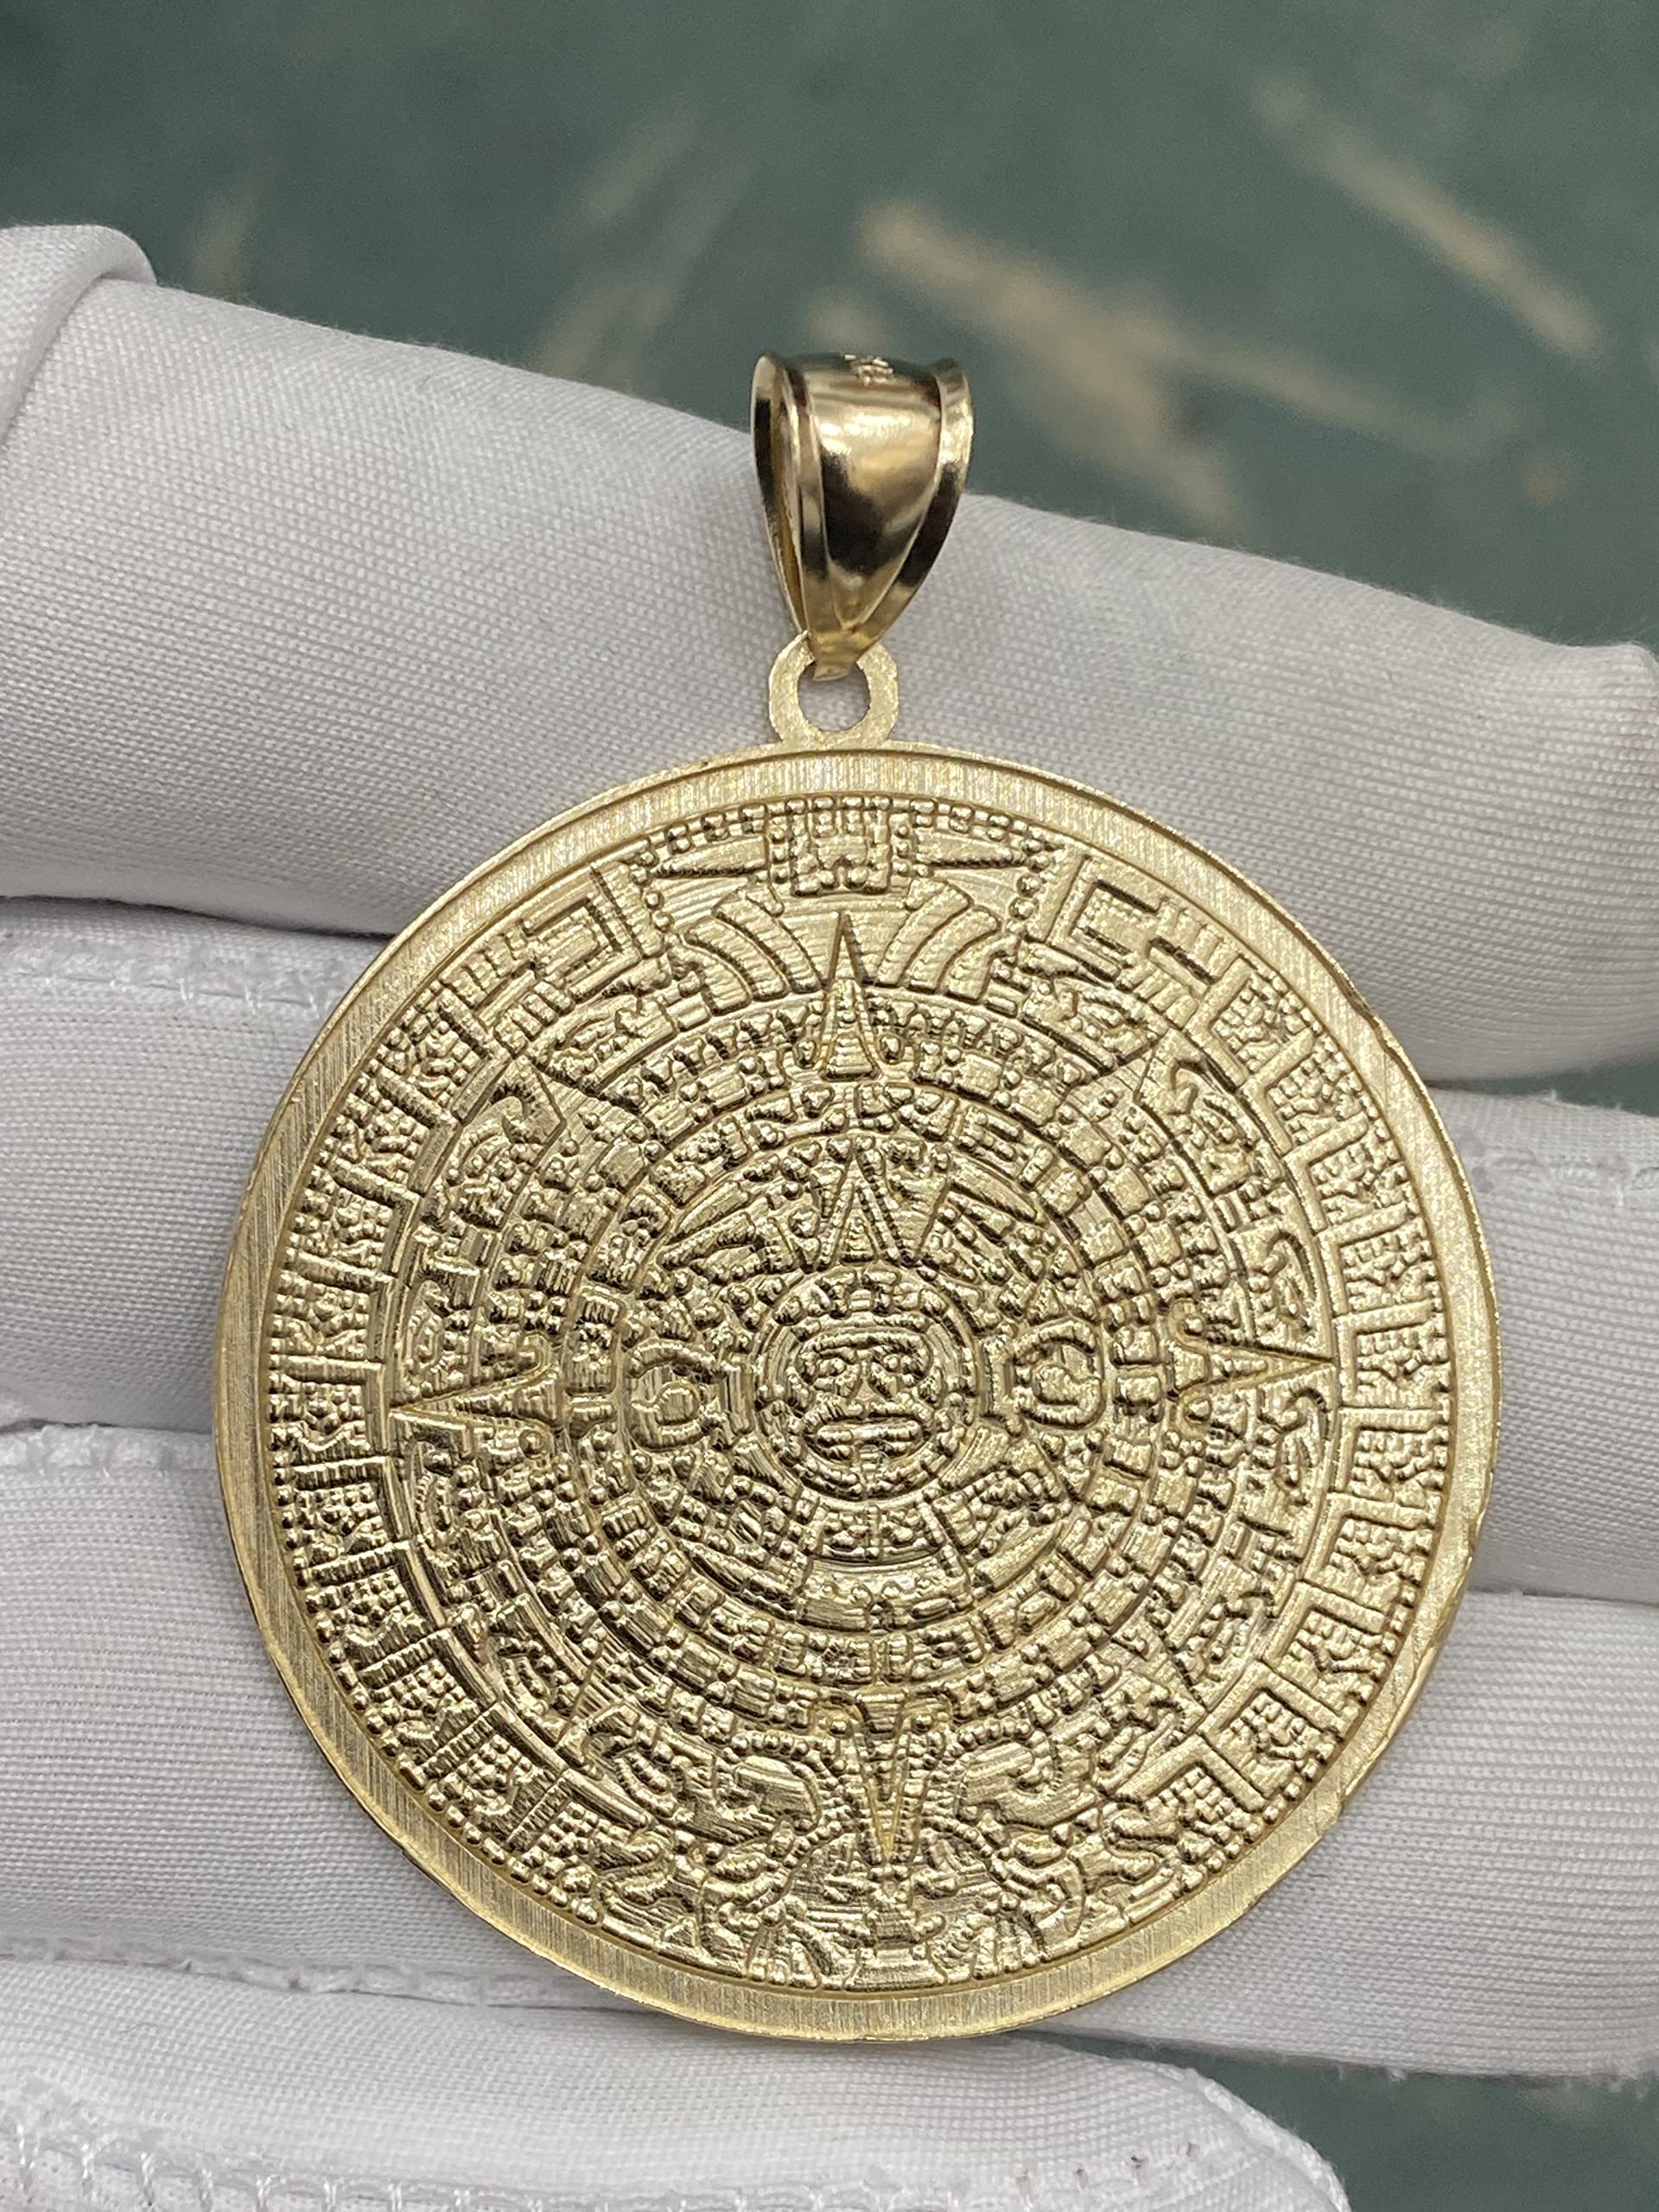 TGDJ 14K Yellow Gold Aztec Mayan Calendar Charm Pendant, 45x45 mm Diamond-Cut Ornate, Handmade Spiritual Symbol, Gold Stamped Fine Jewelry, Great Gift for Men & Women (45mm)